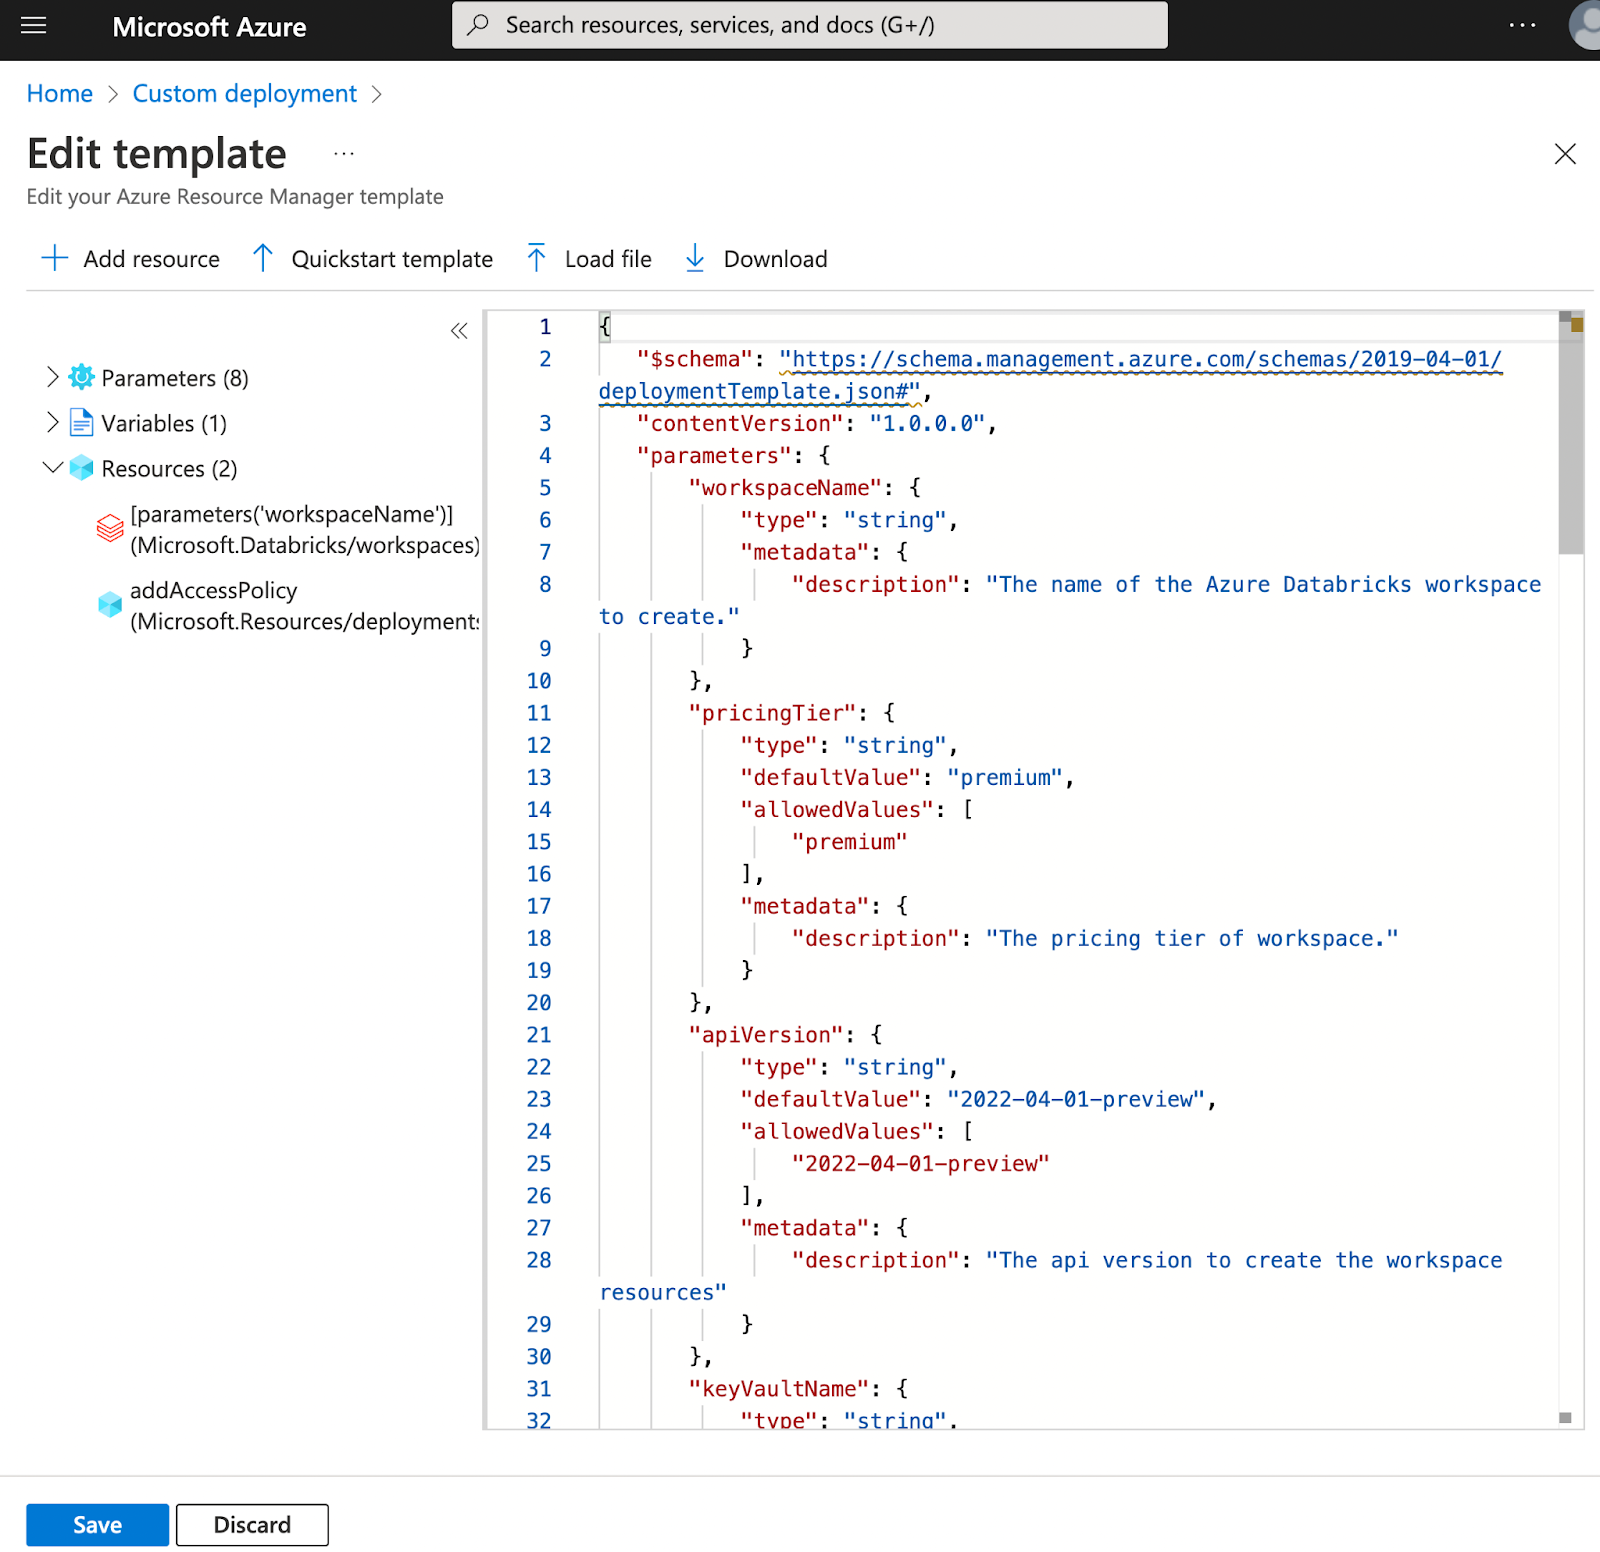 Edit deployment page of the Azure custom deployment portal